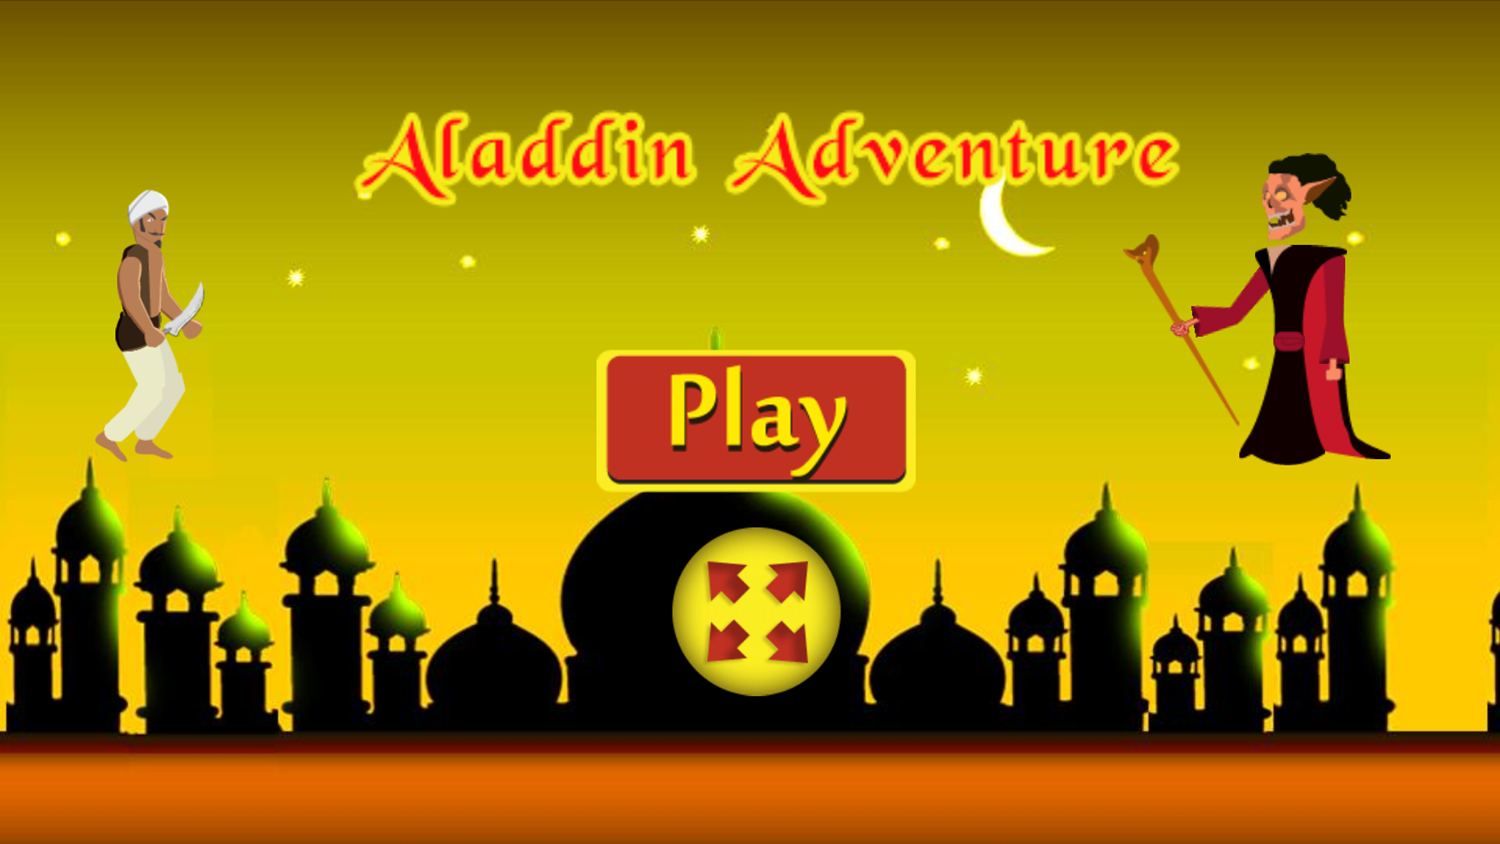 Aladdin Adventure Game Welcome Screen Screenshot.